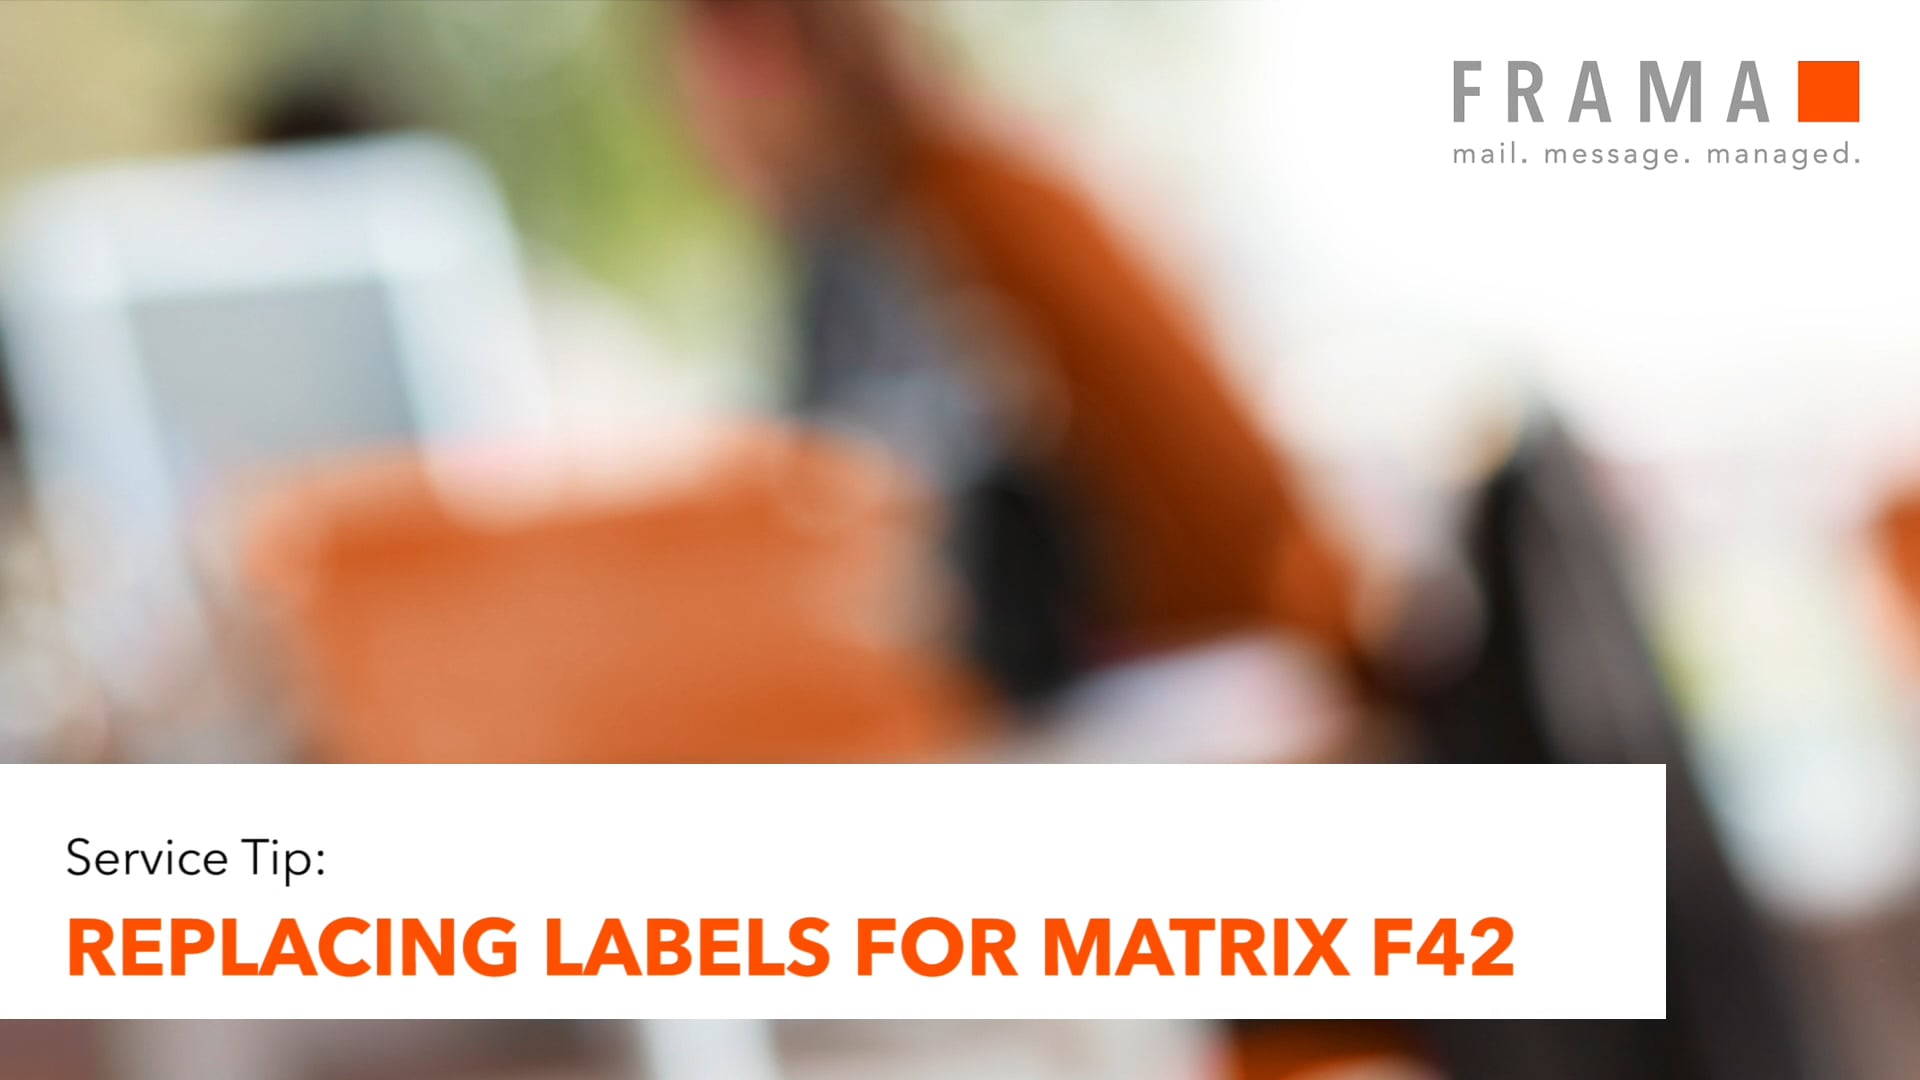 Frama Service Tip: Replacing labels for Matrix F42